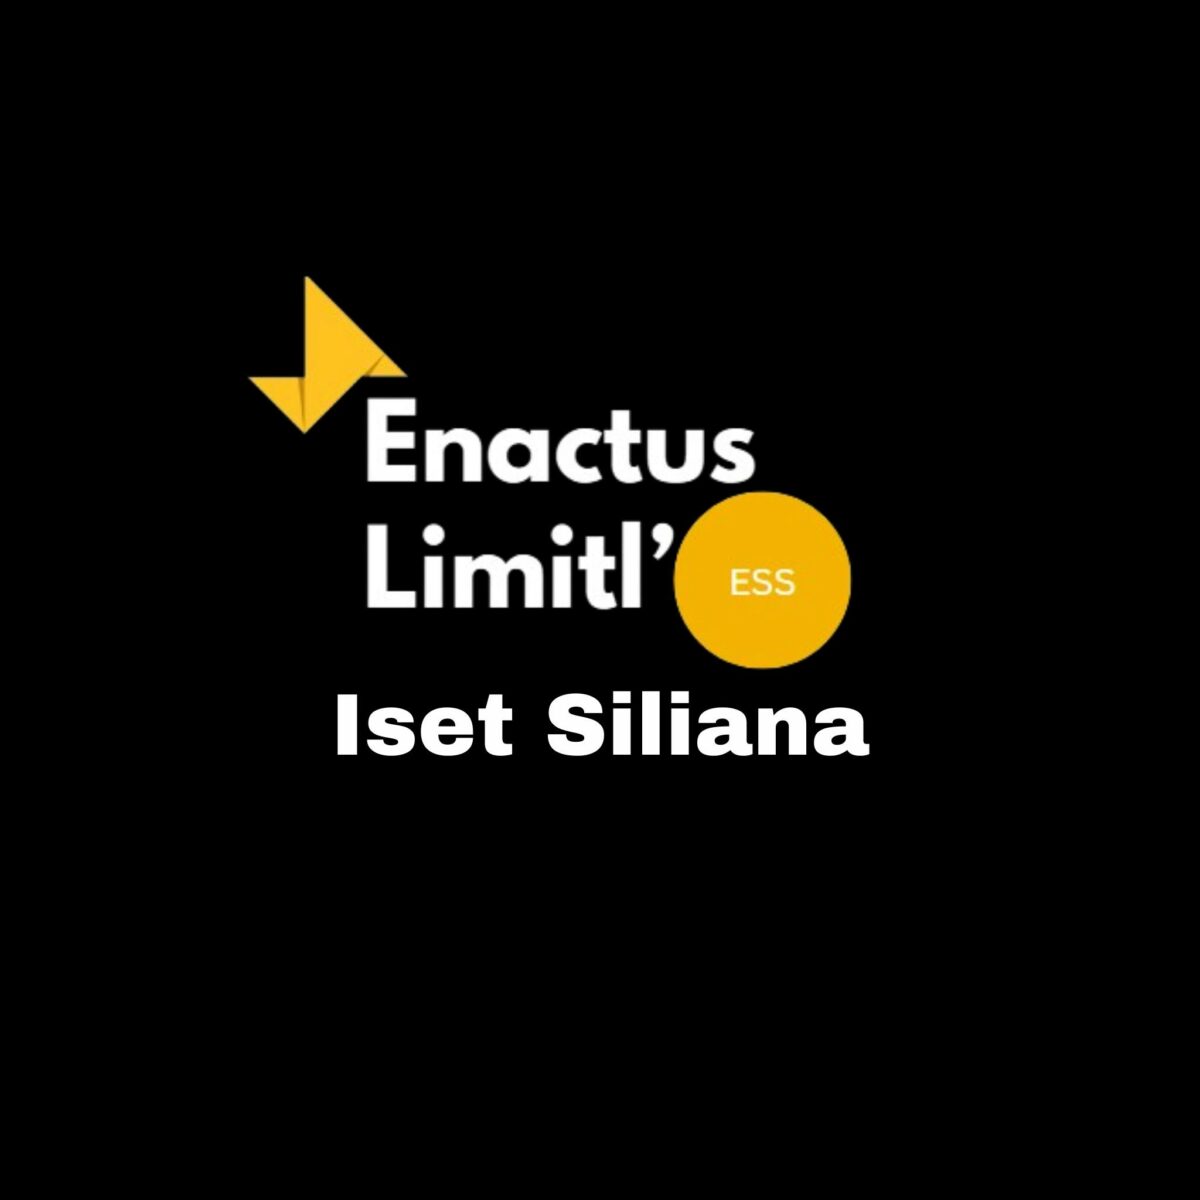 ENACTUS Limitl’ess ISET Siliana